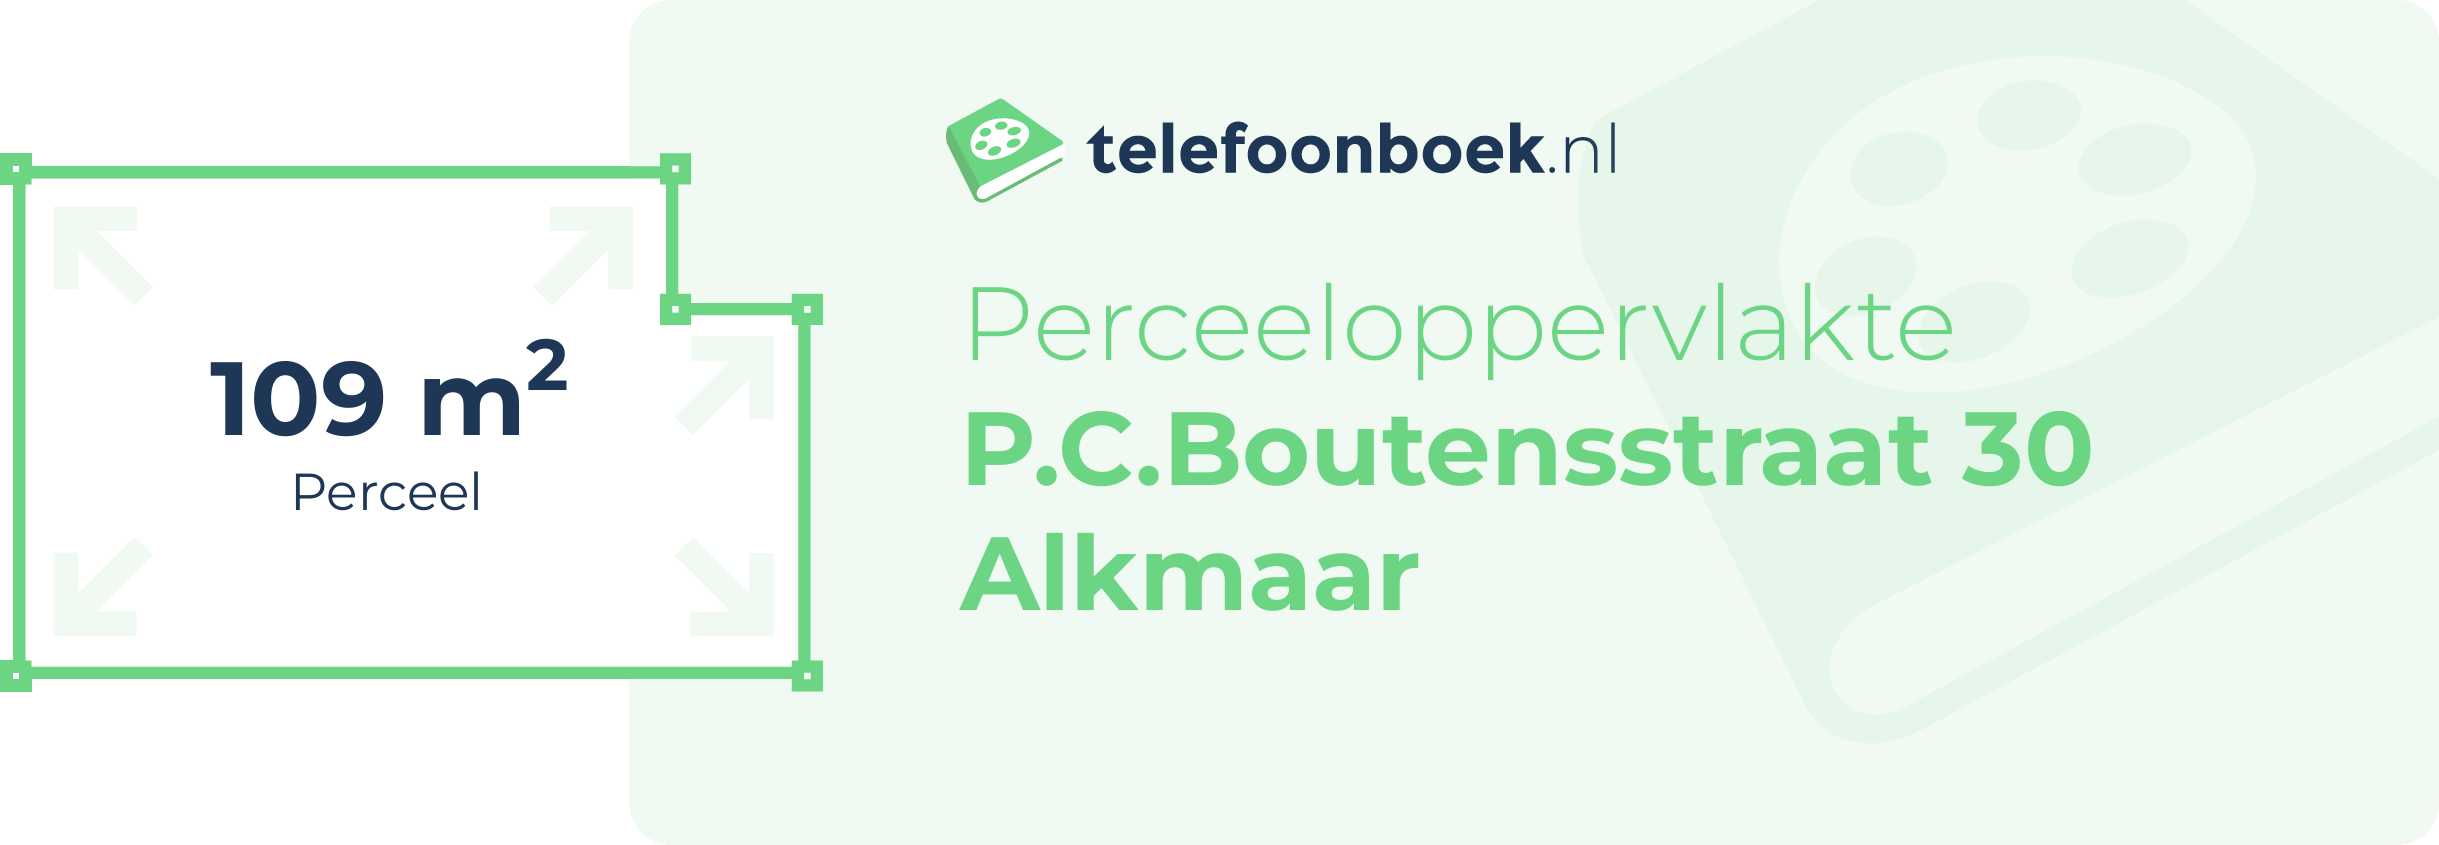 Perceeloppervlakte P.C.Boutensstraat 30 Alkmaar